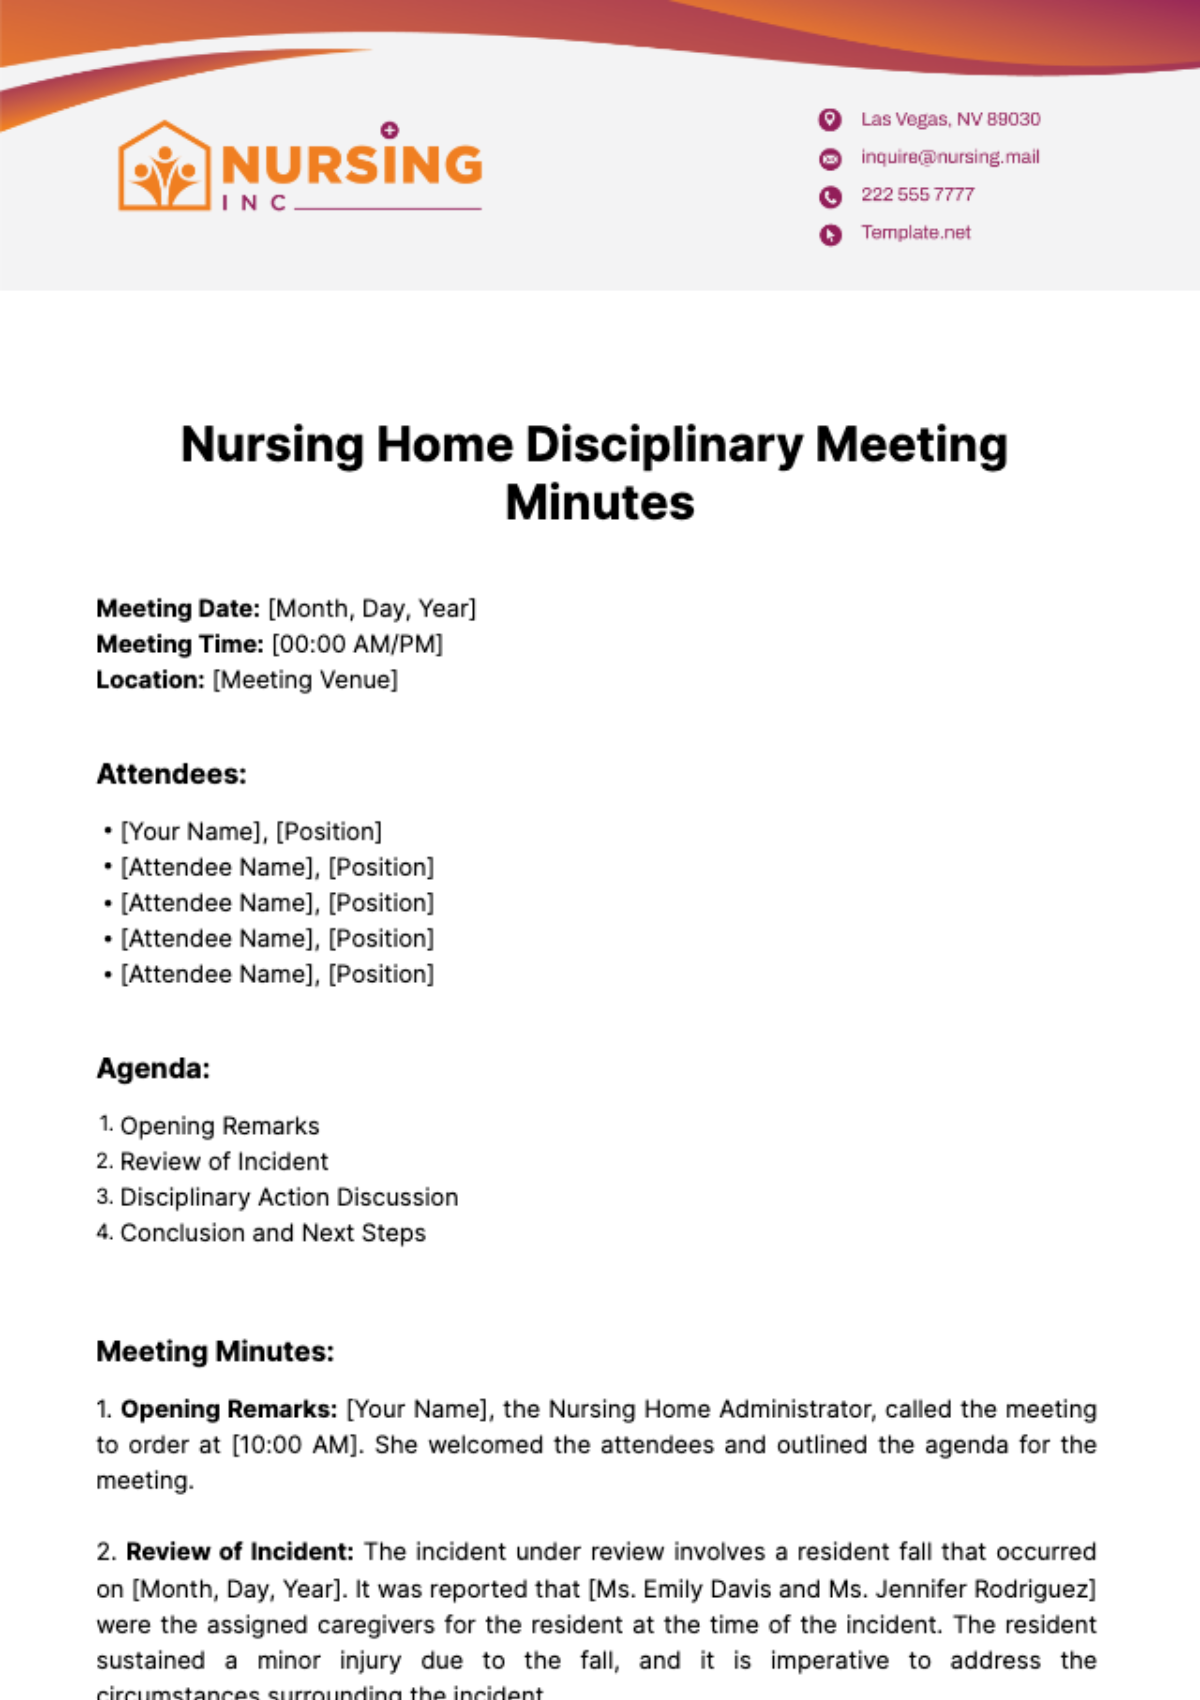 Nursing Home Disciplinary Meeting Minutes Template